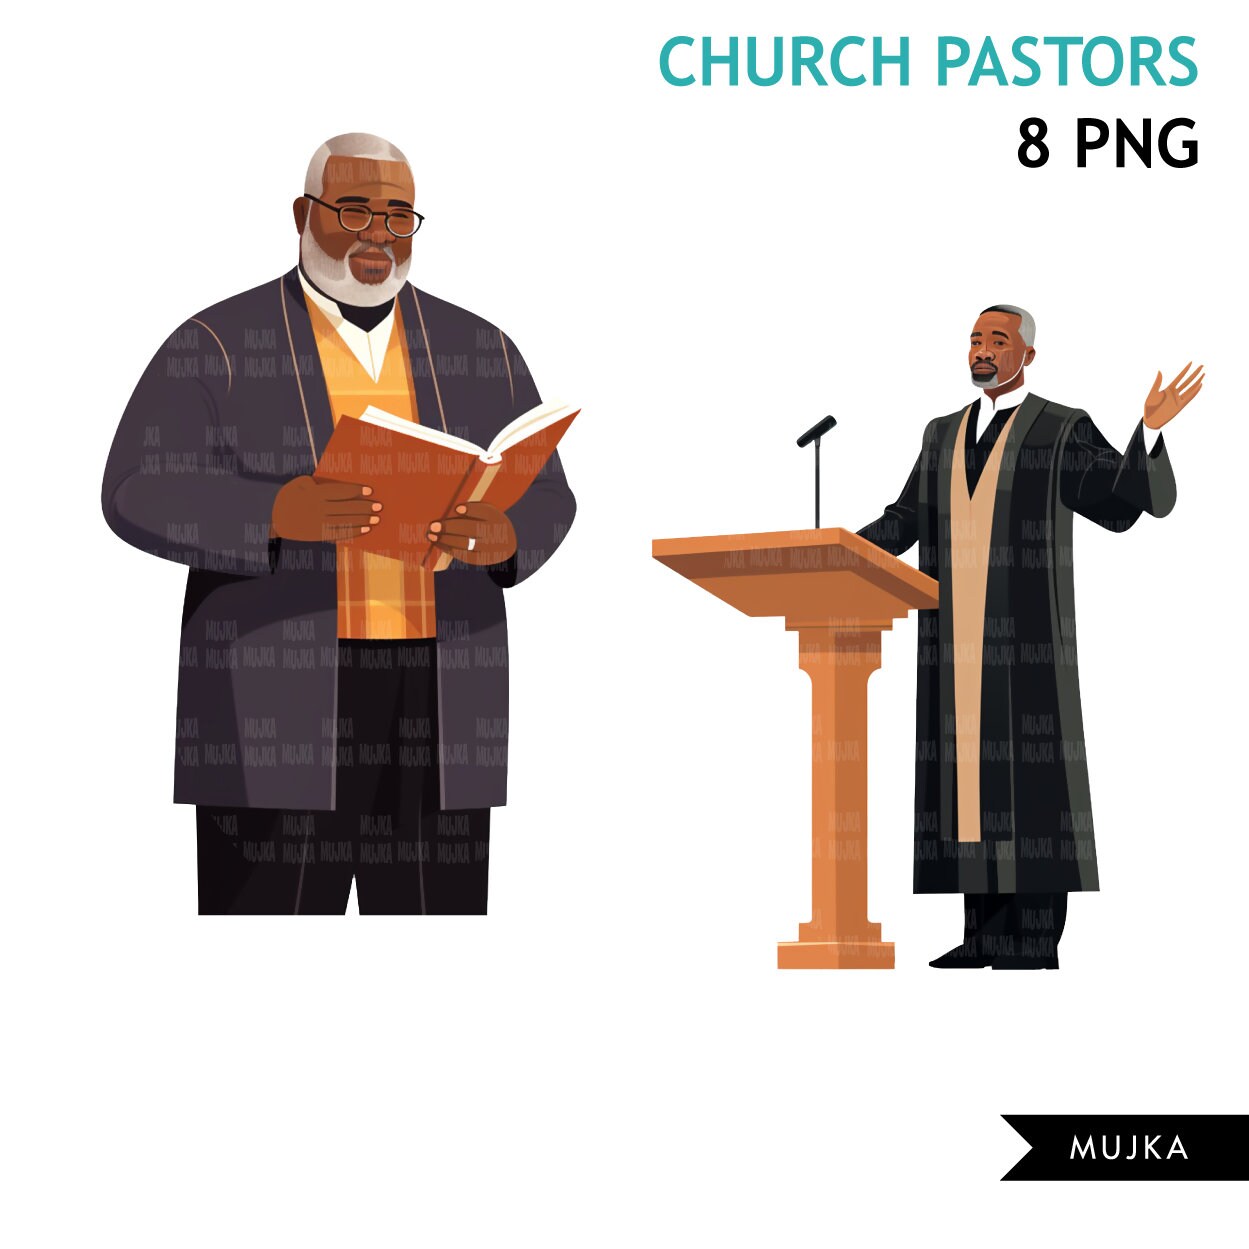 Pastor PNG, Preacher Clipart, Bible reading, Senior Religious Black man of faith, Planner sticker, Deacon, Christian Designs, Bible vibes